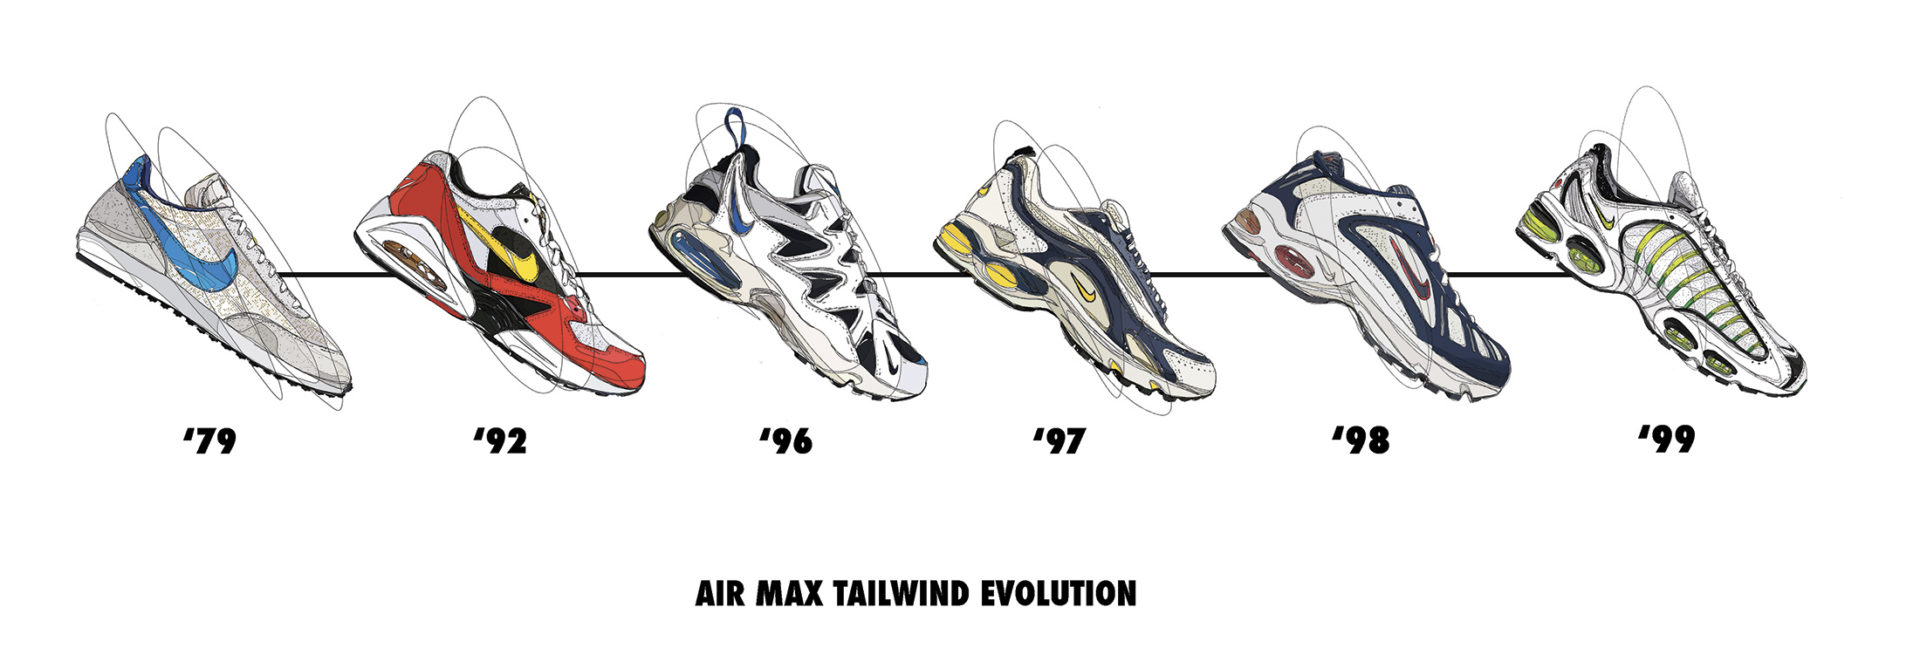 Nike Tailwind Evolution